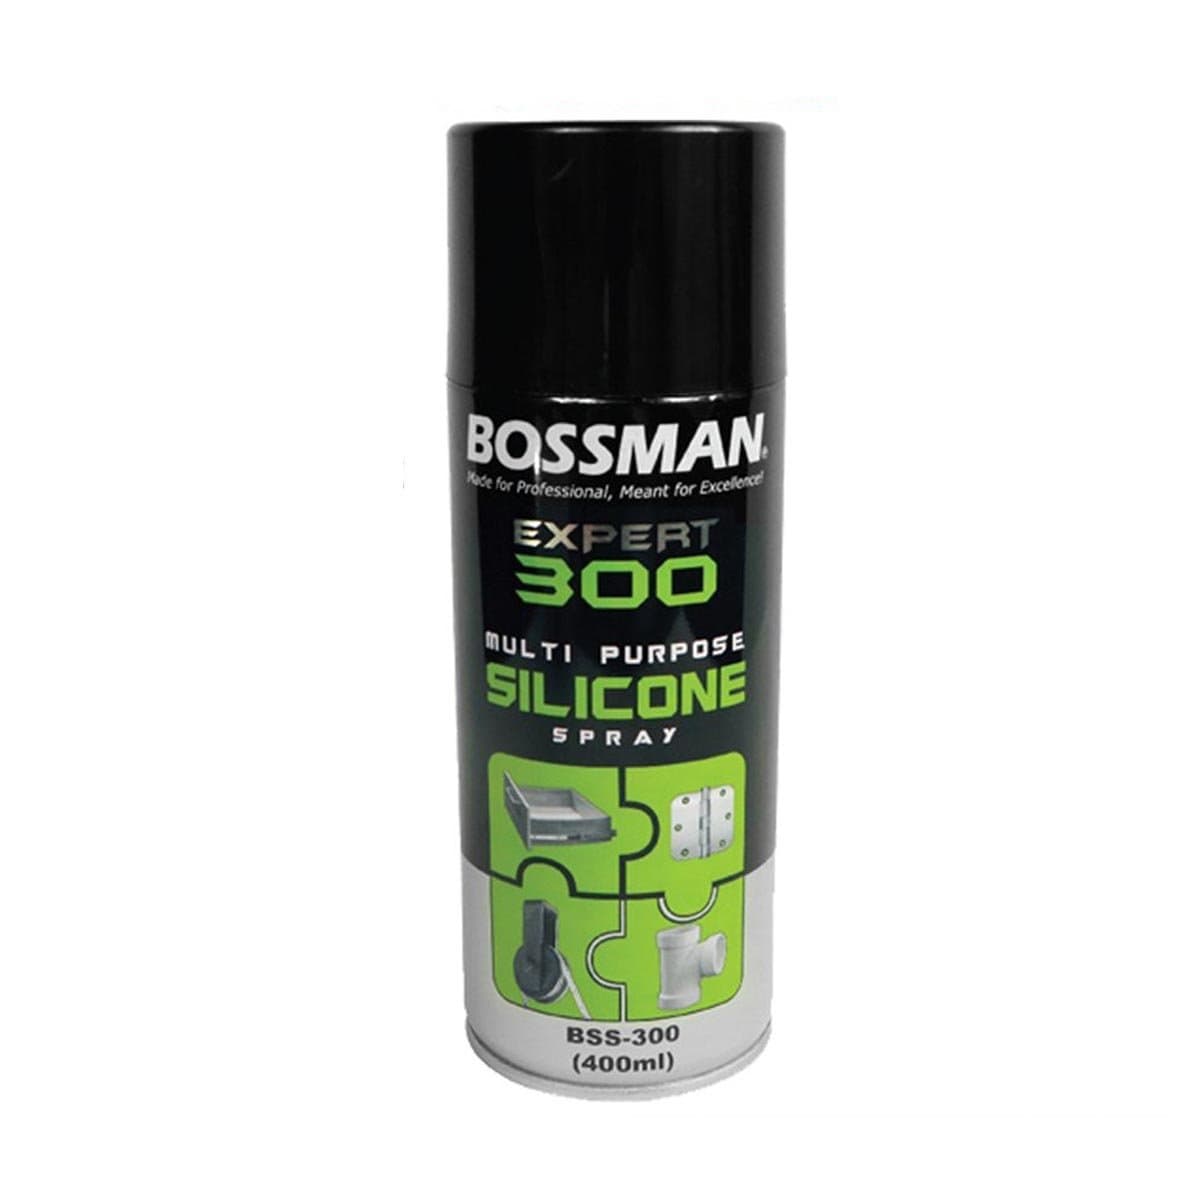 BOSSMAN Expert 300 Multipurpose Silicone Spray 400ml BSS300